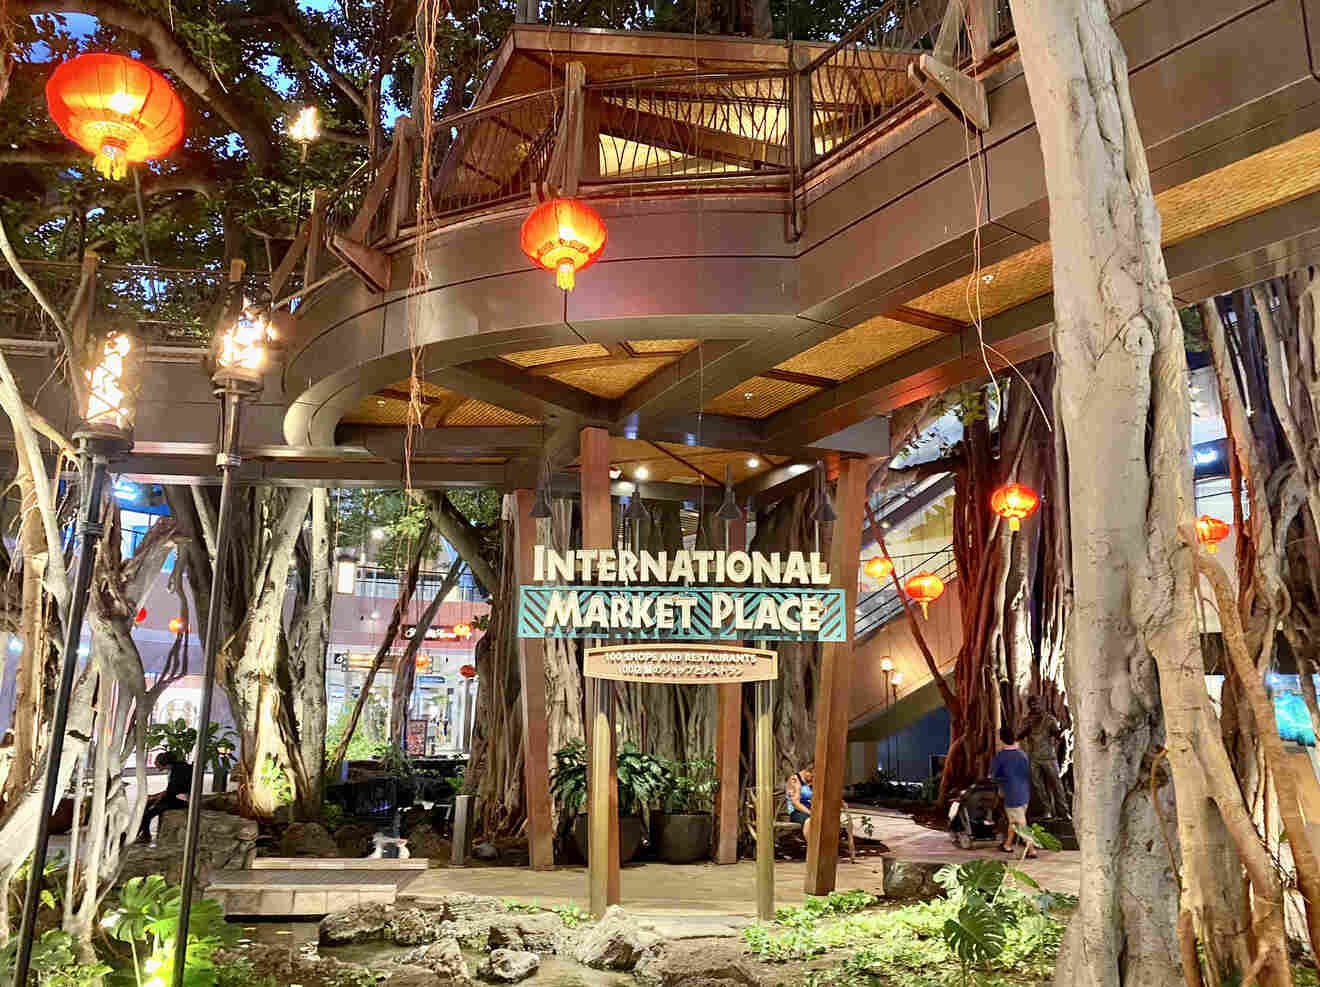 Interior of International Market Place at Waikiki